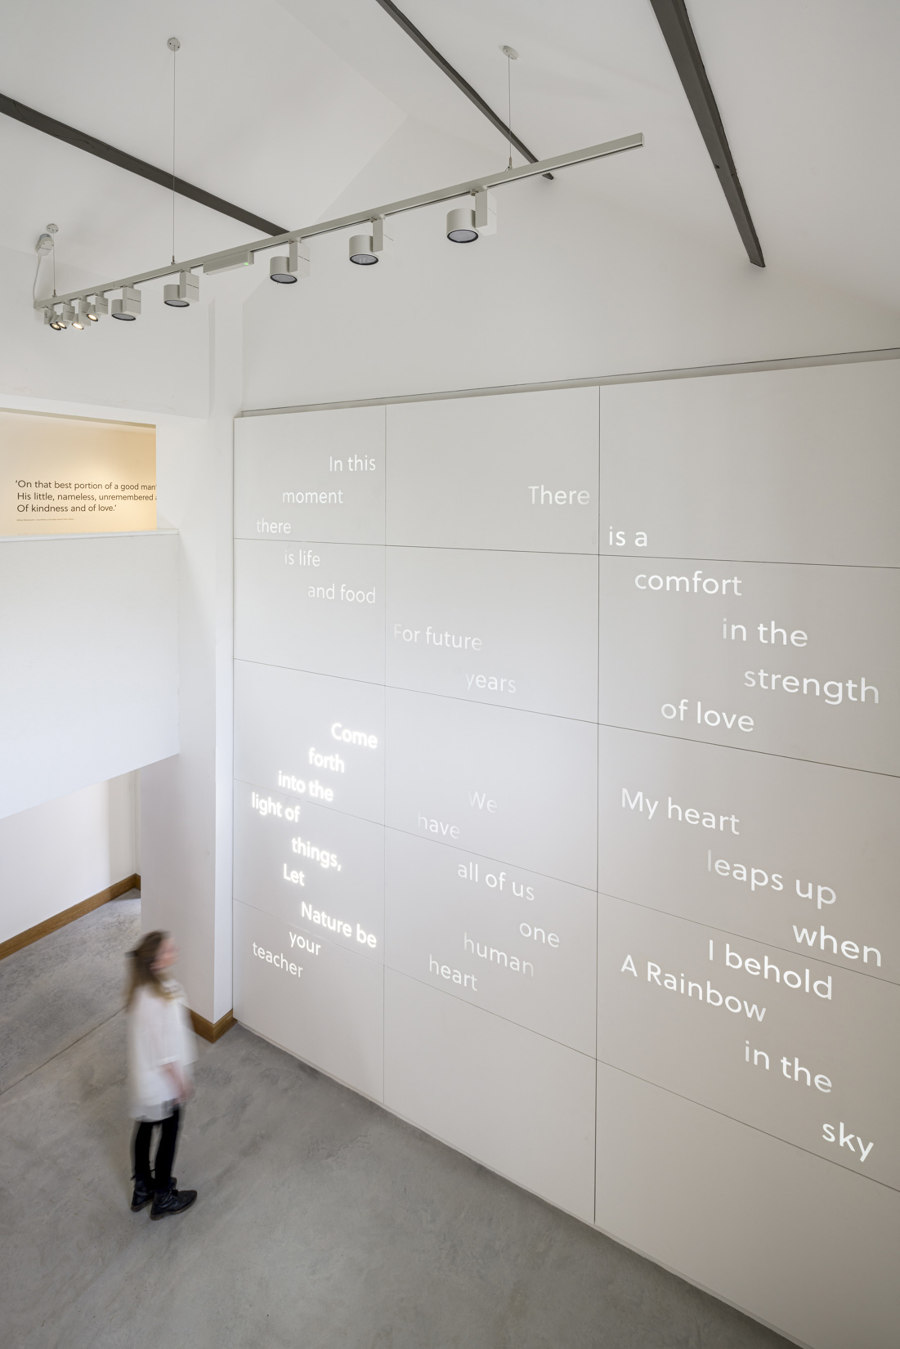 Wordsworth Grasmere by Nissen Richards Studio | Museums